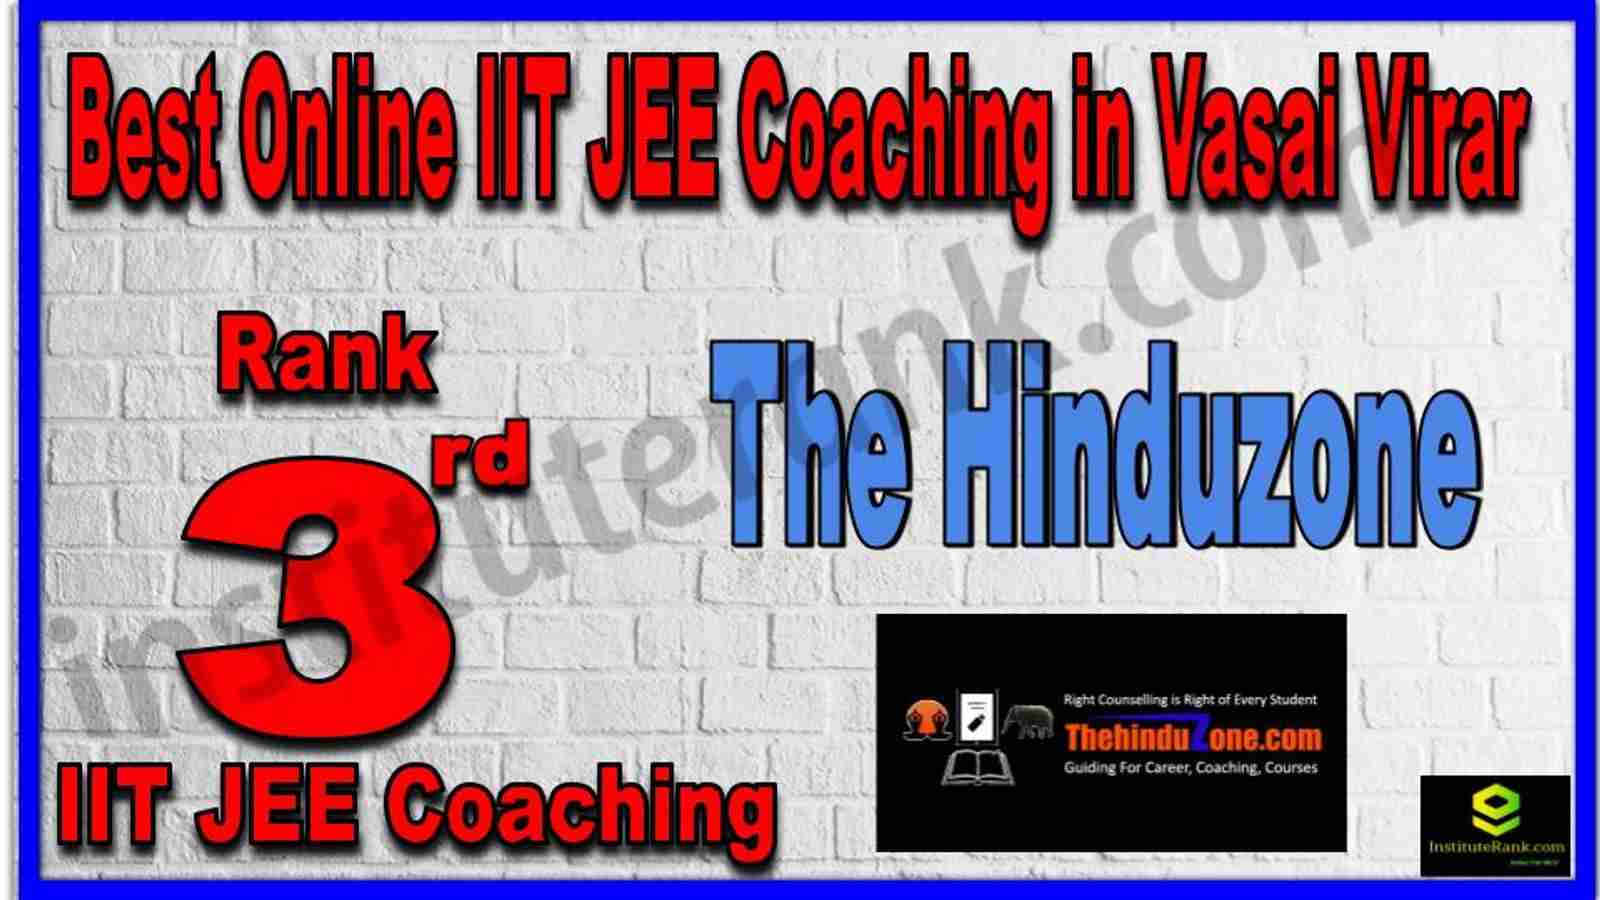 Rank 3rd Best Online IIT JEE Coaching in Vasai Virar